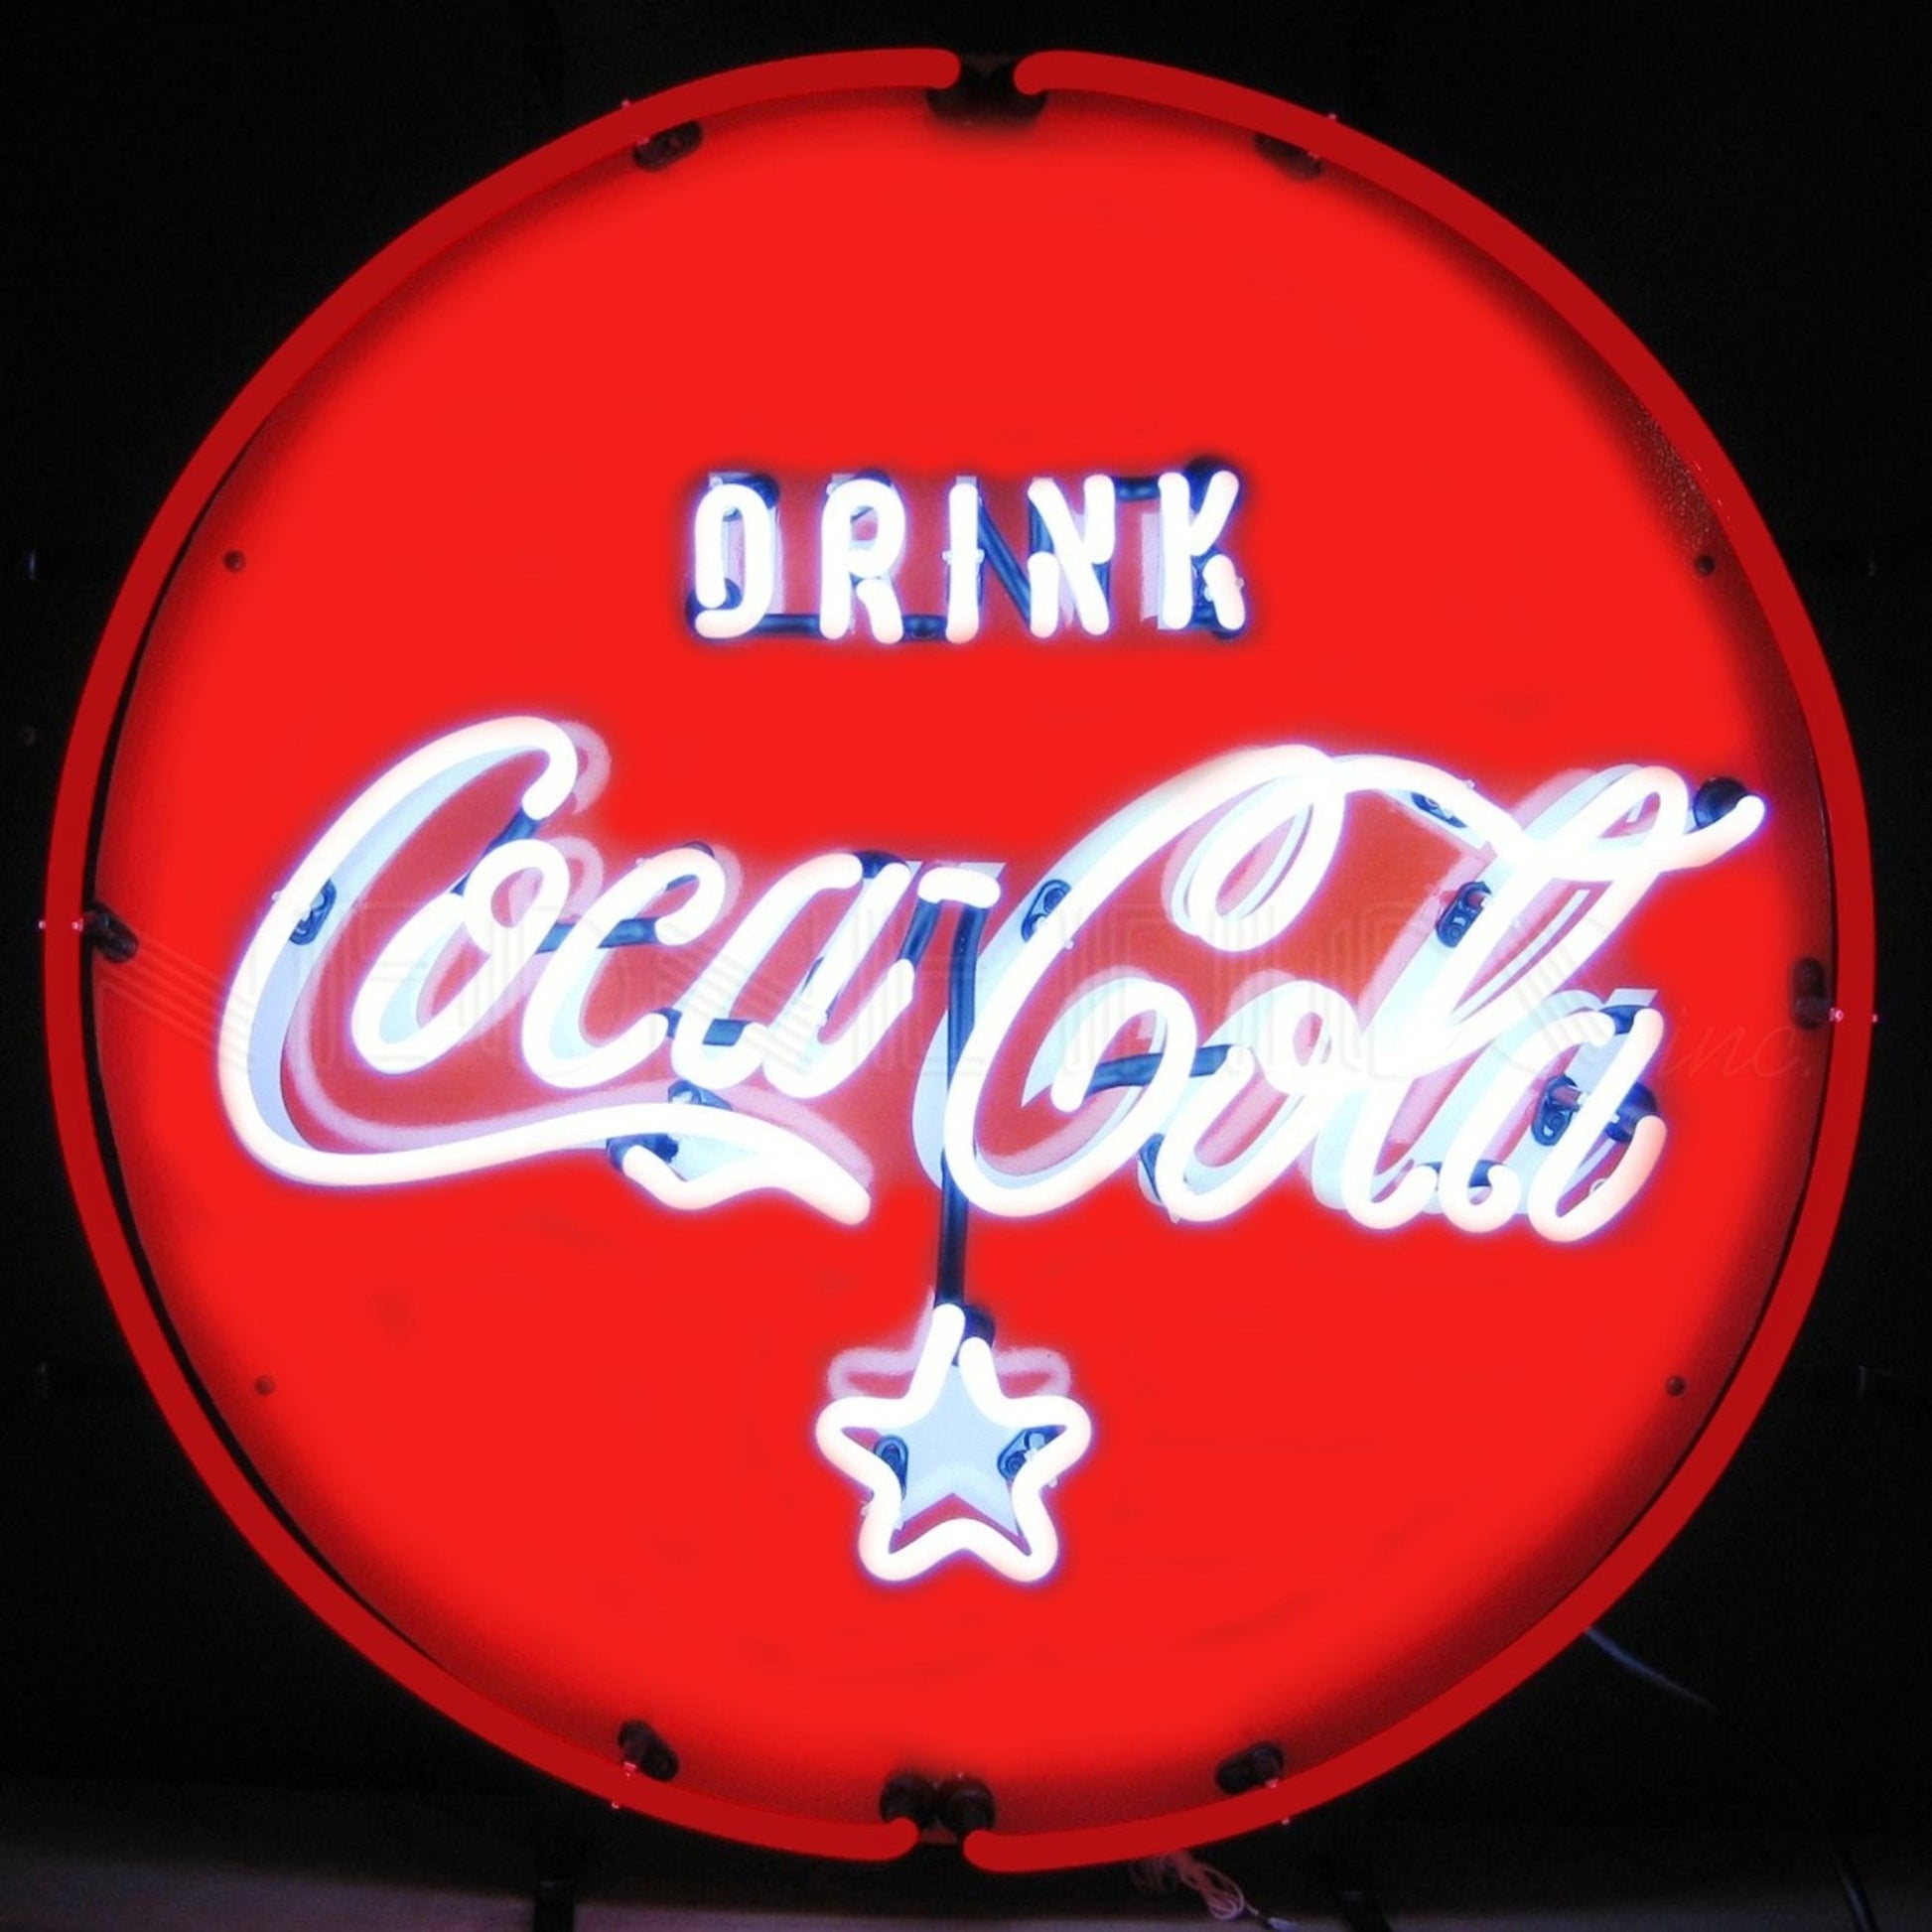 Classic Coca-Cola logo in red and white neon.